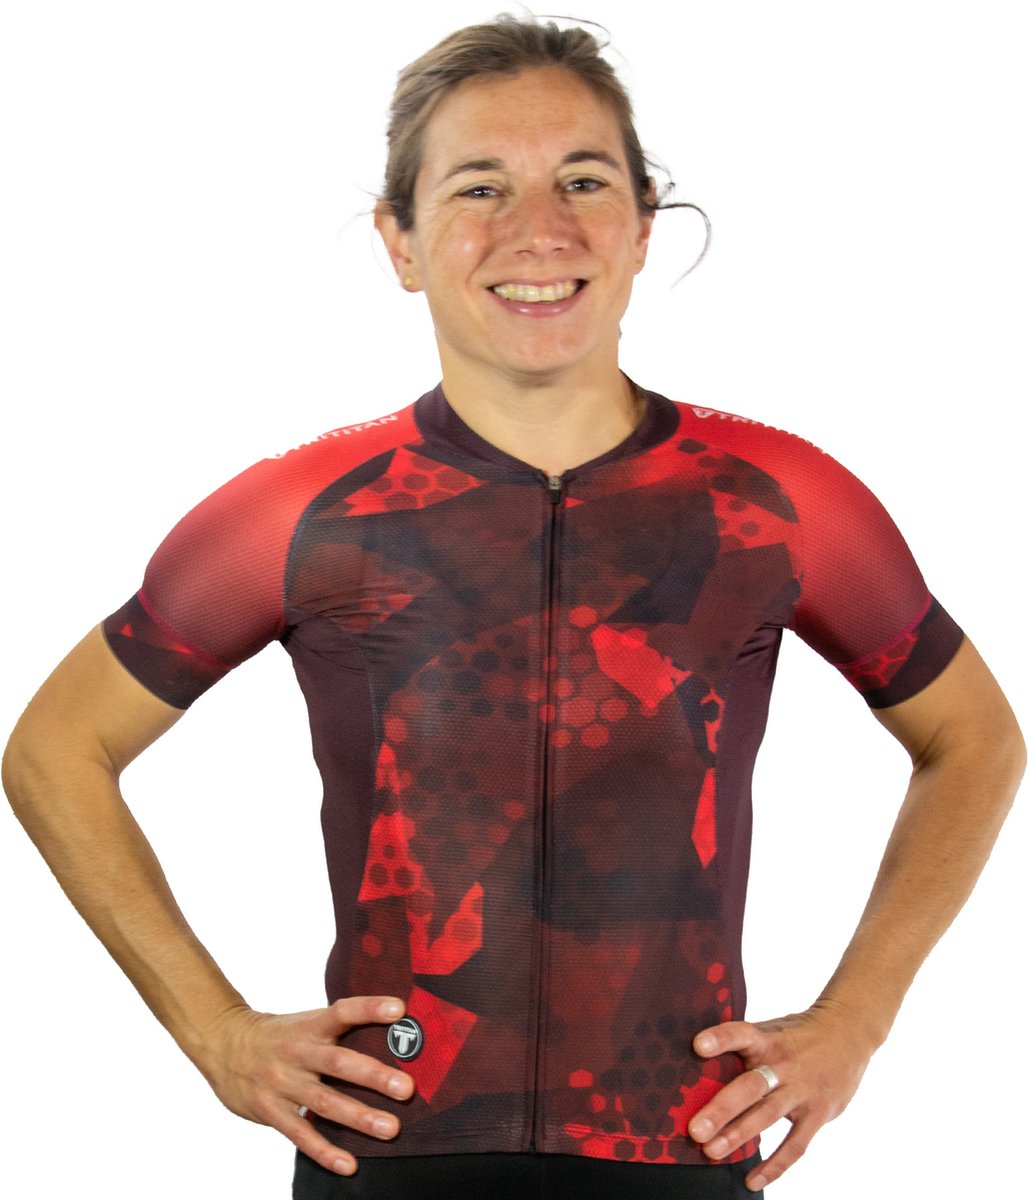 TriTiTan Female Elite Level Cycling Jersey with powerband - Fietsshirt - Fietsjas - 2XS